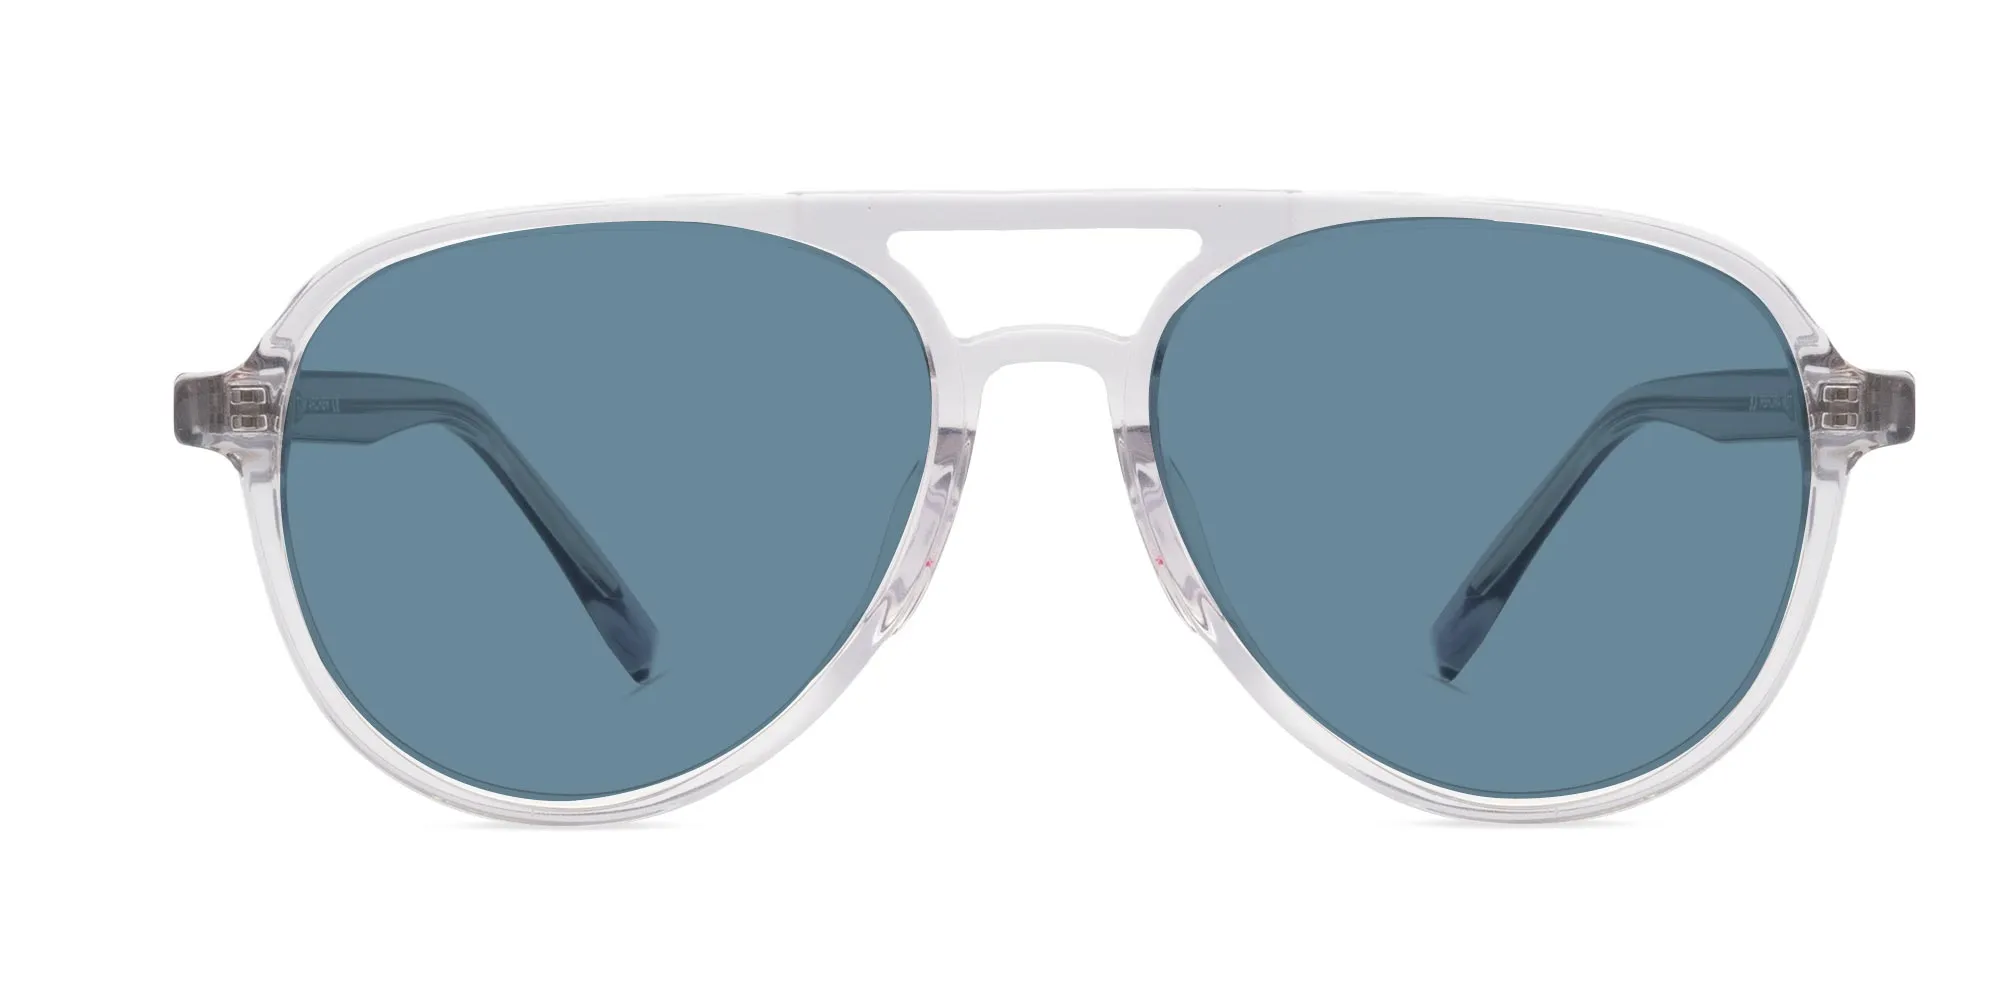 Pilot Sunglasses With Blue Tint